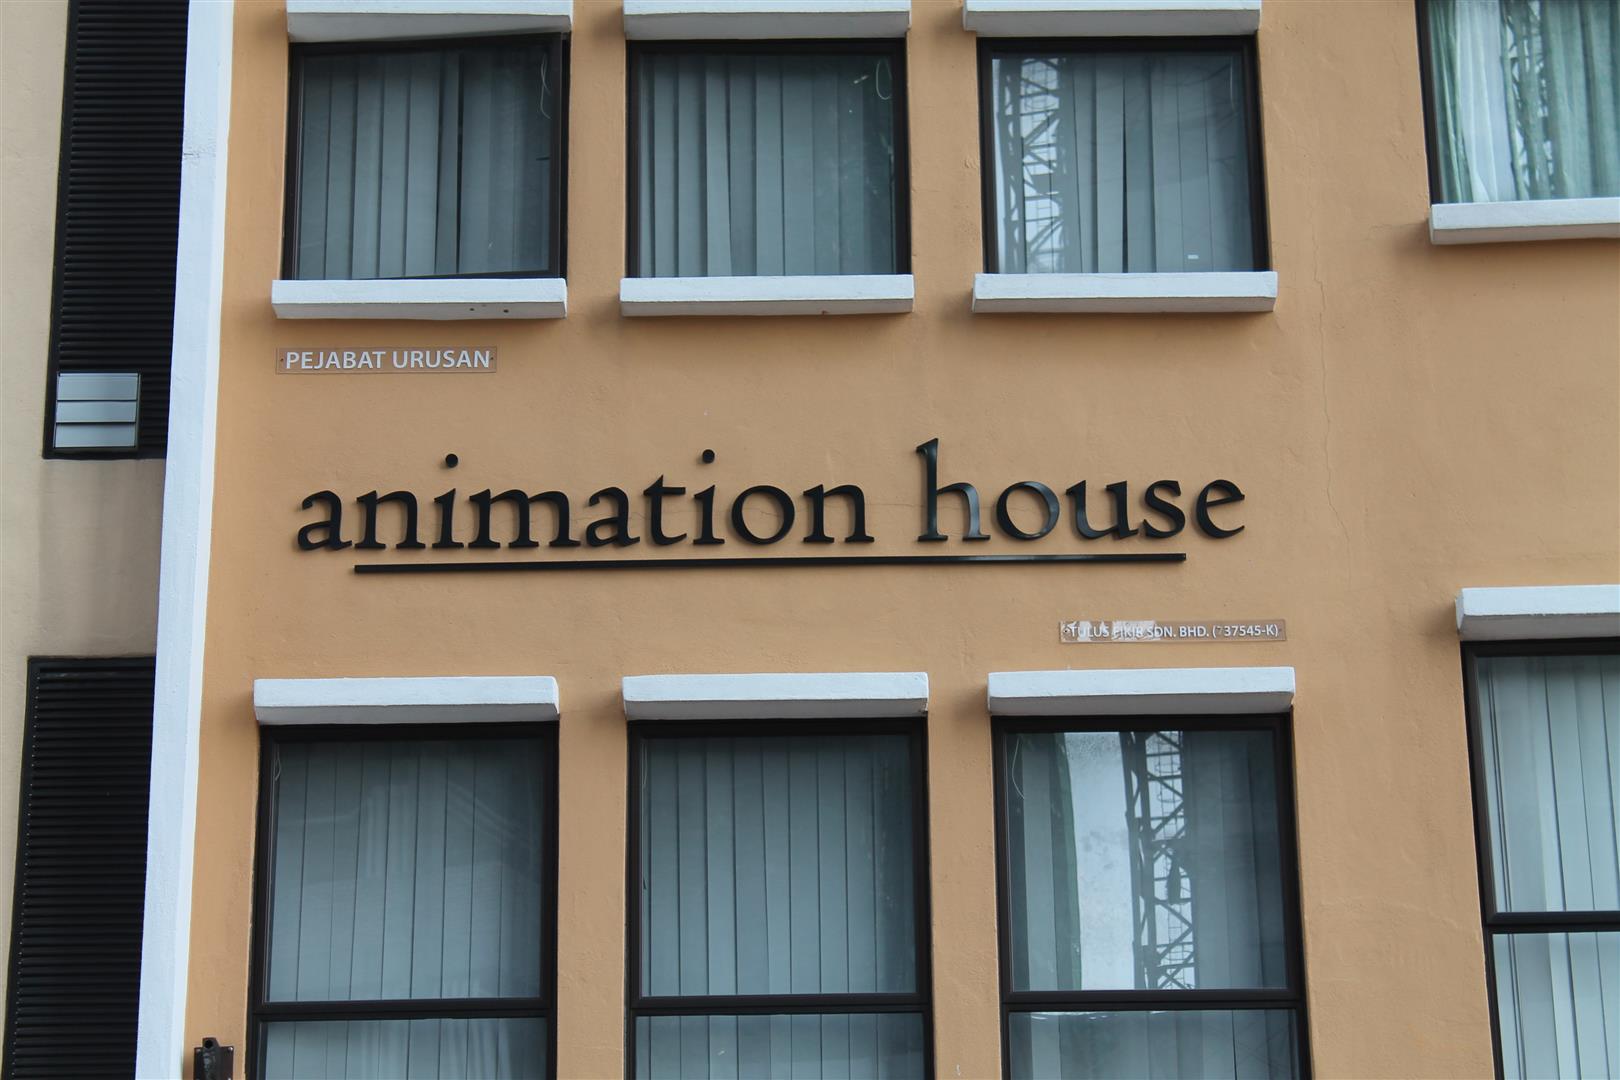 Tulus Fikir - Visit to Local Animation Company 26